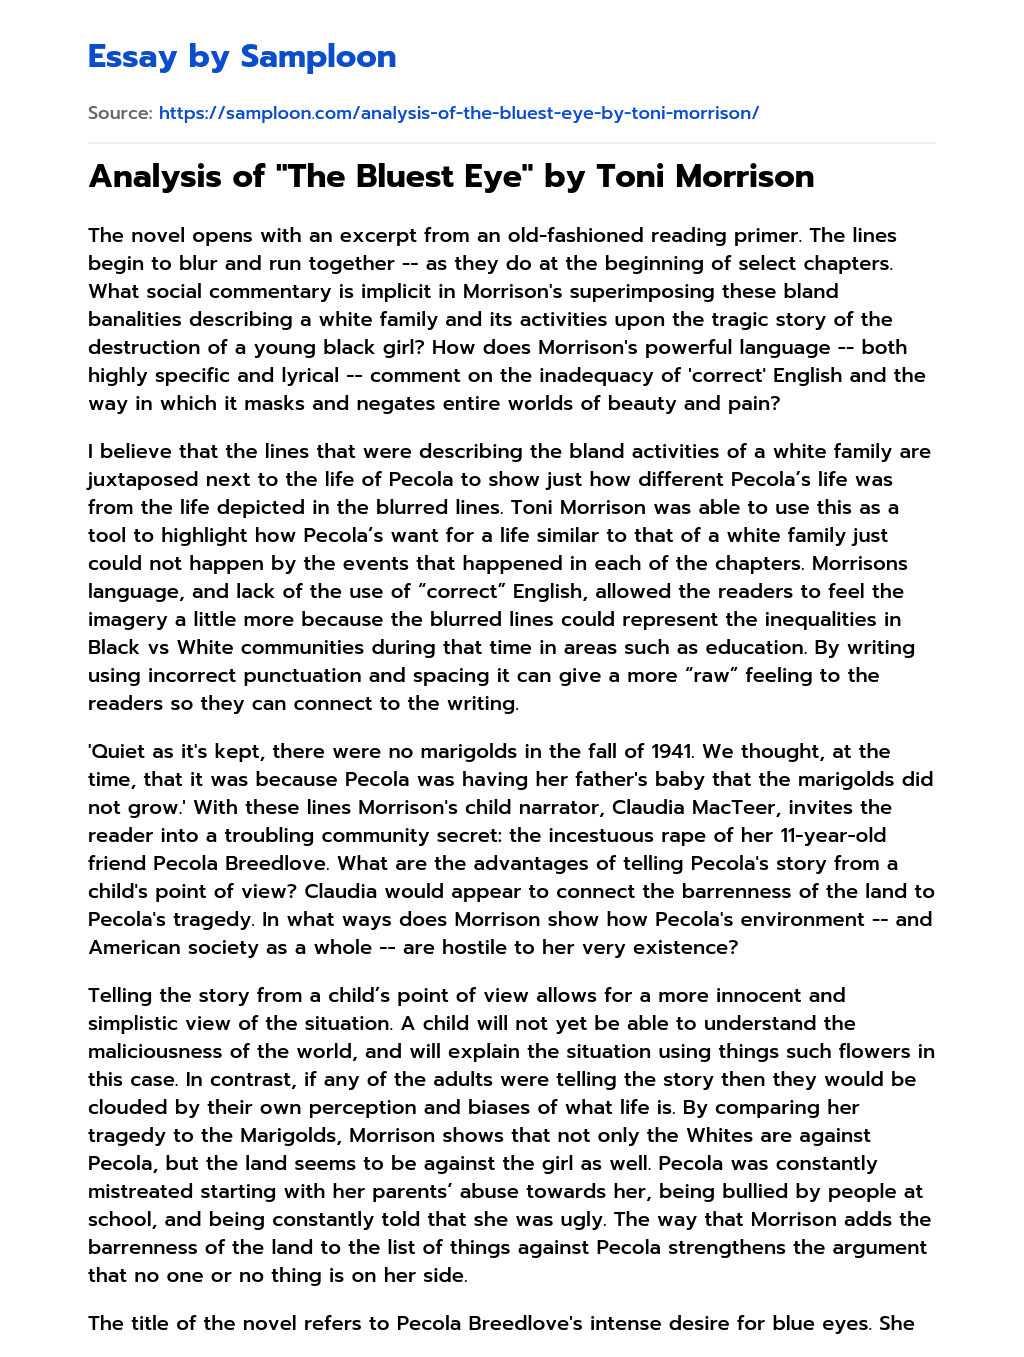 Analysis of “The Bluest Eye” by Toni Morrison essay